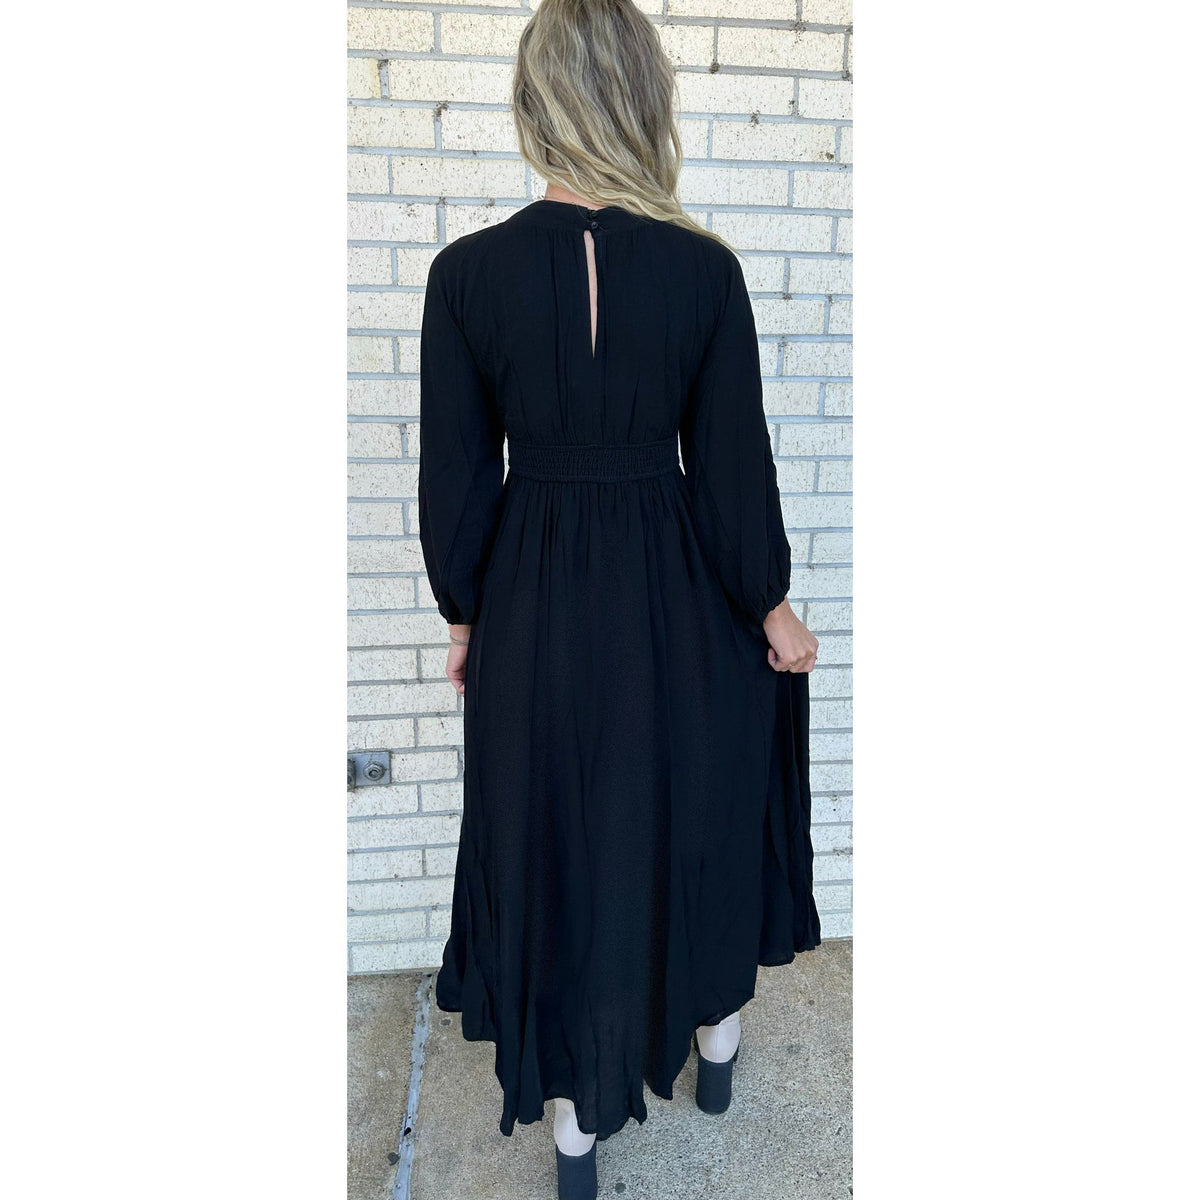 Wyoming Black Fall Maxi Dress